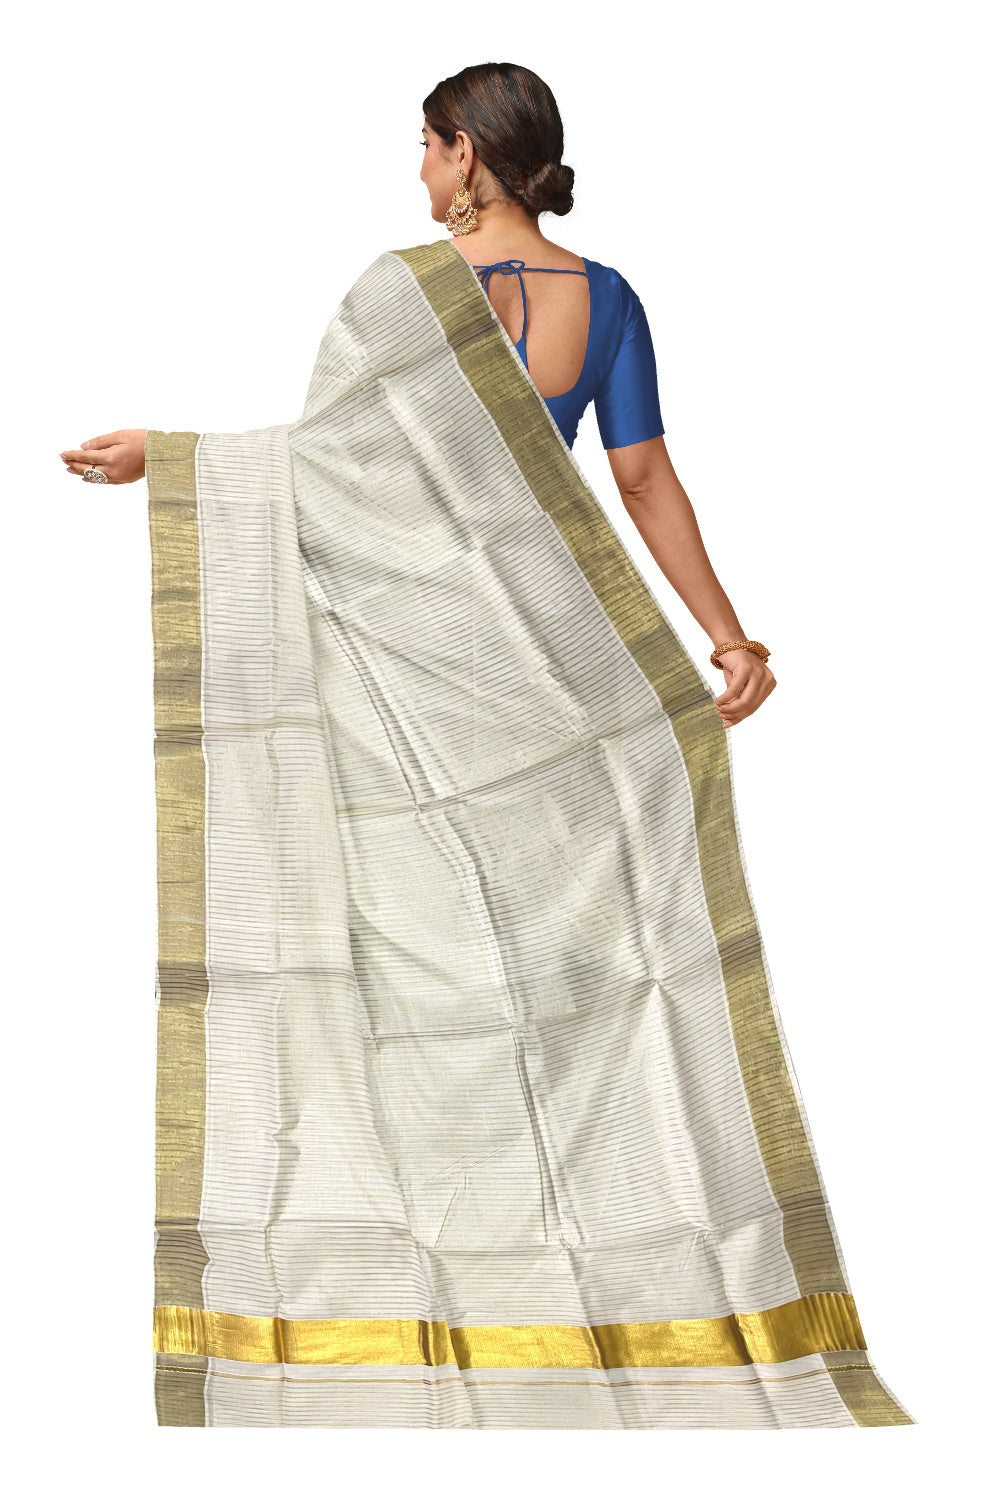 Pure Cotton Kerala Kasavu Lines Onam Saree (Handloom Quality Kasavu) with 3 inch Border